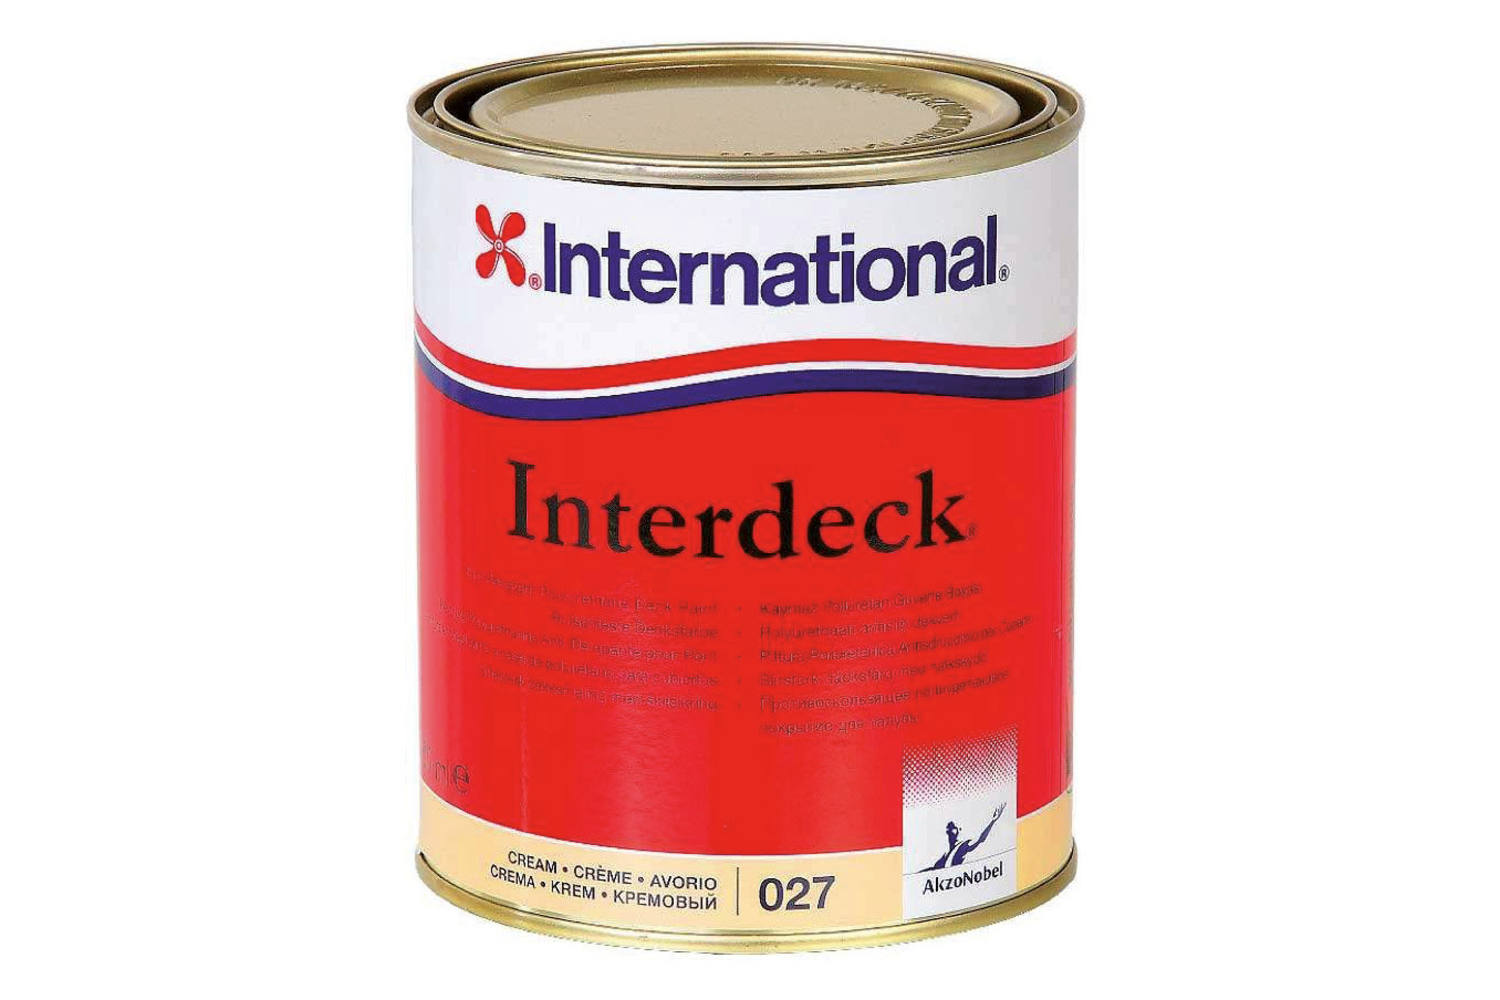 International Interdeck creme 027 - 0.75ltr